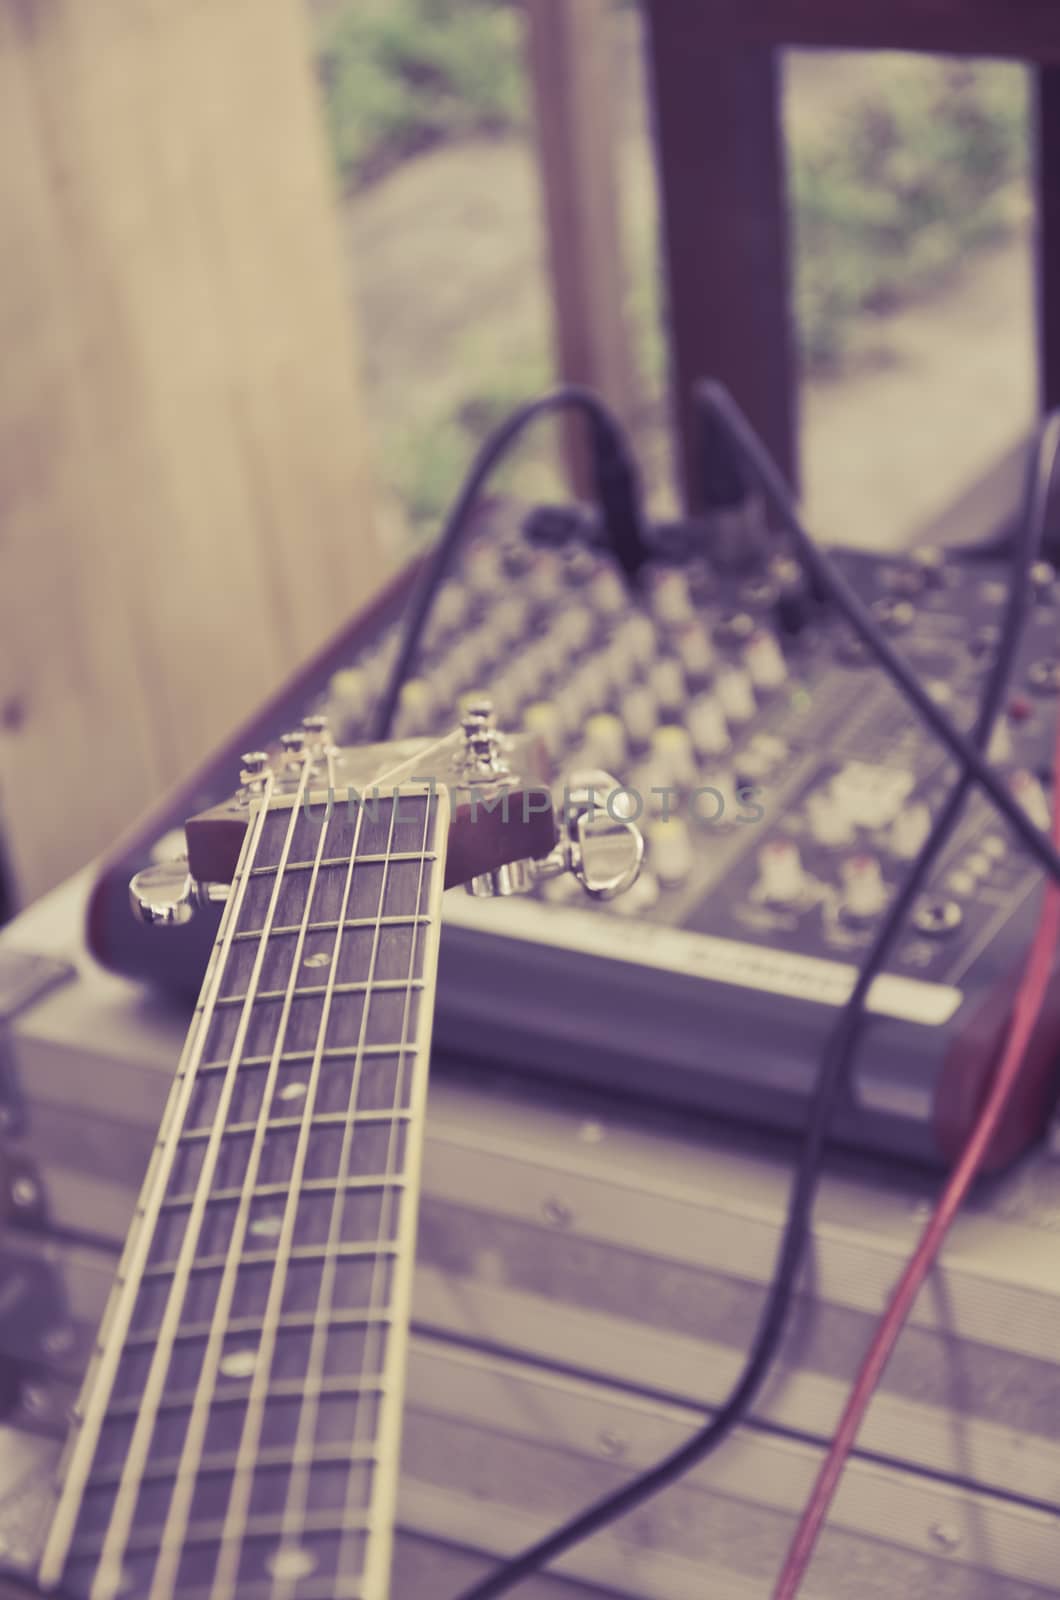 Fretboard of guitar mixer control background